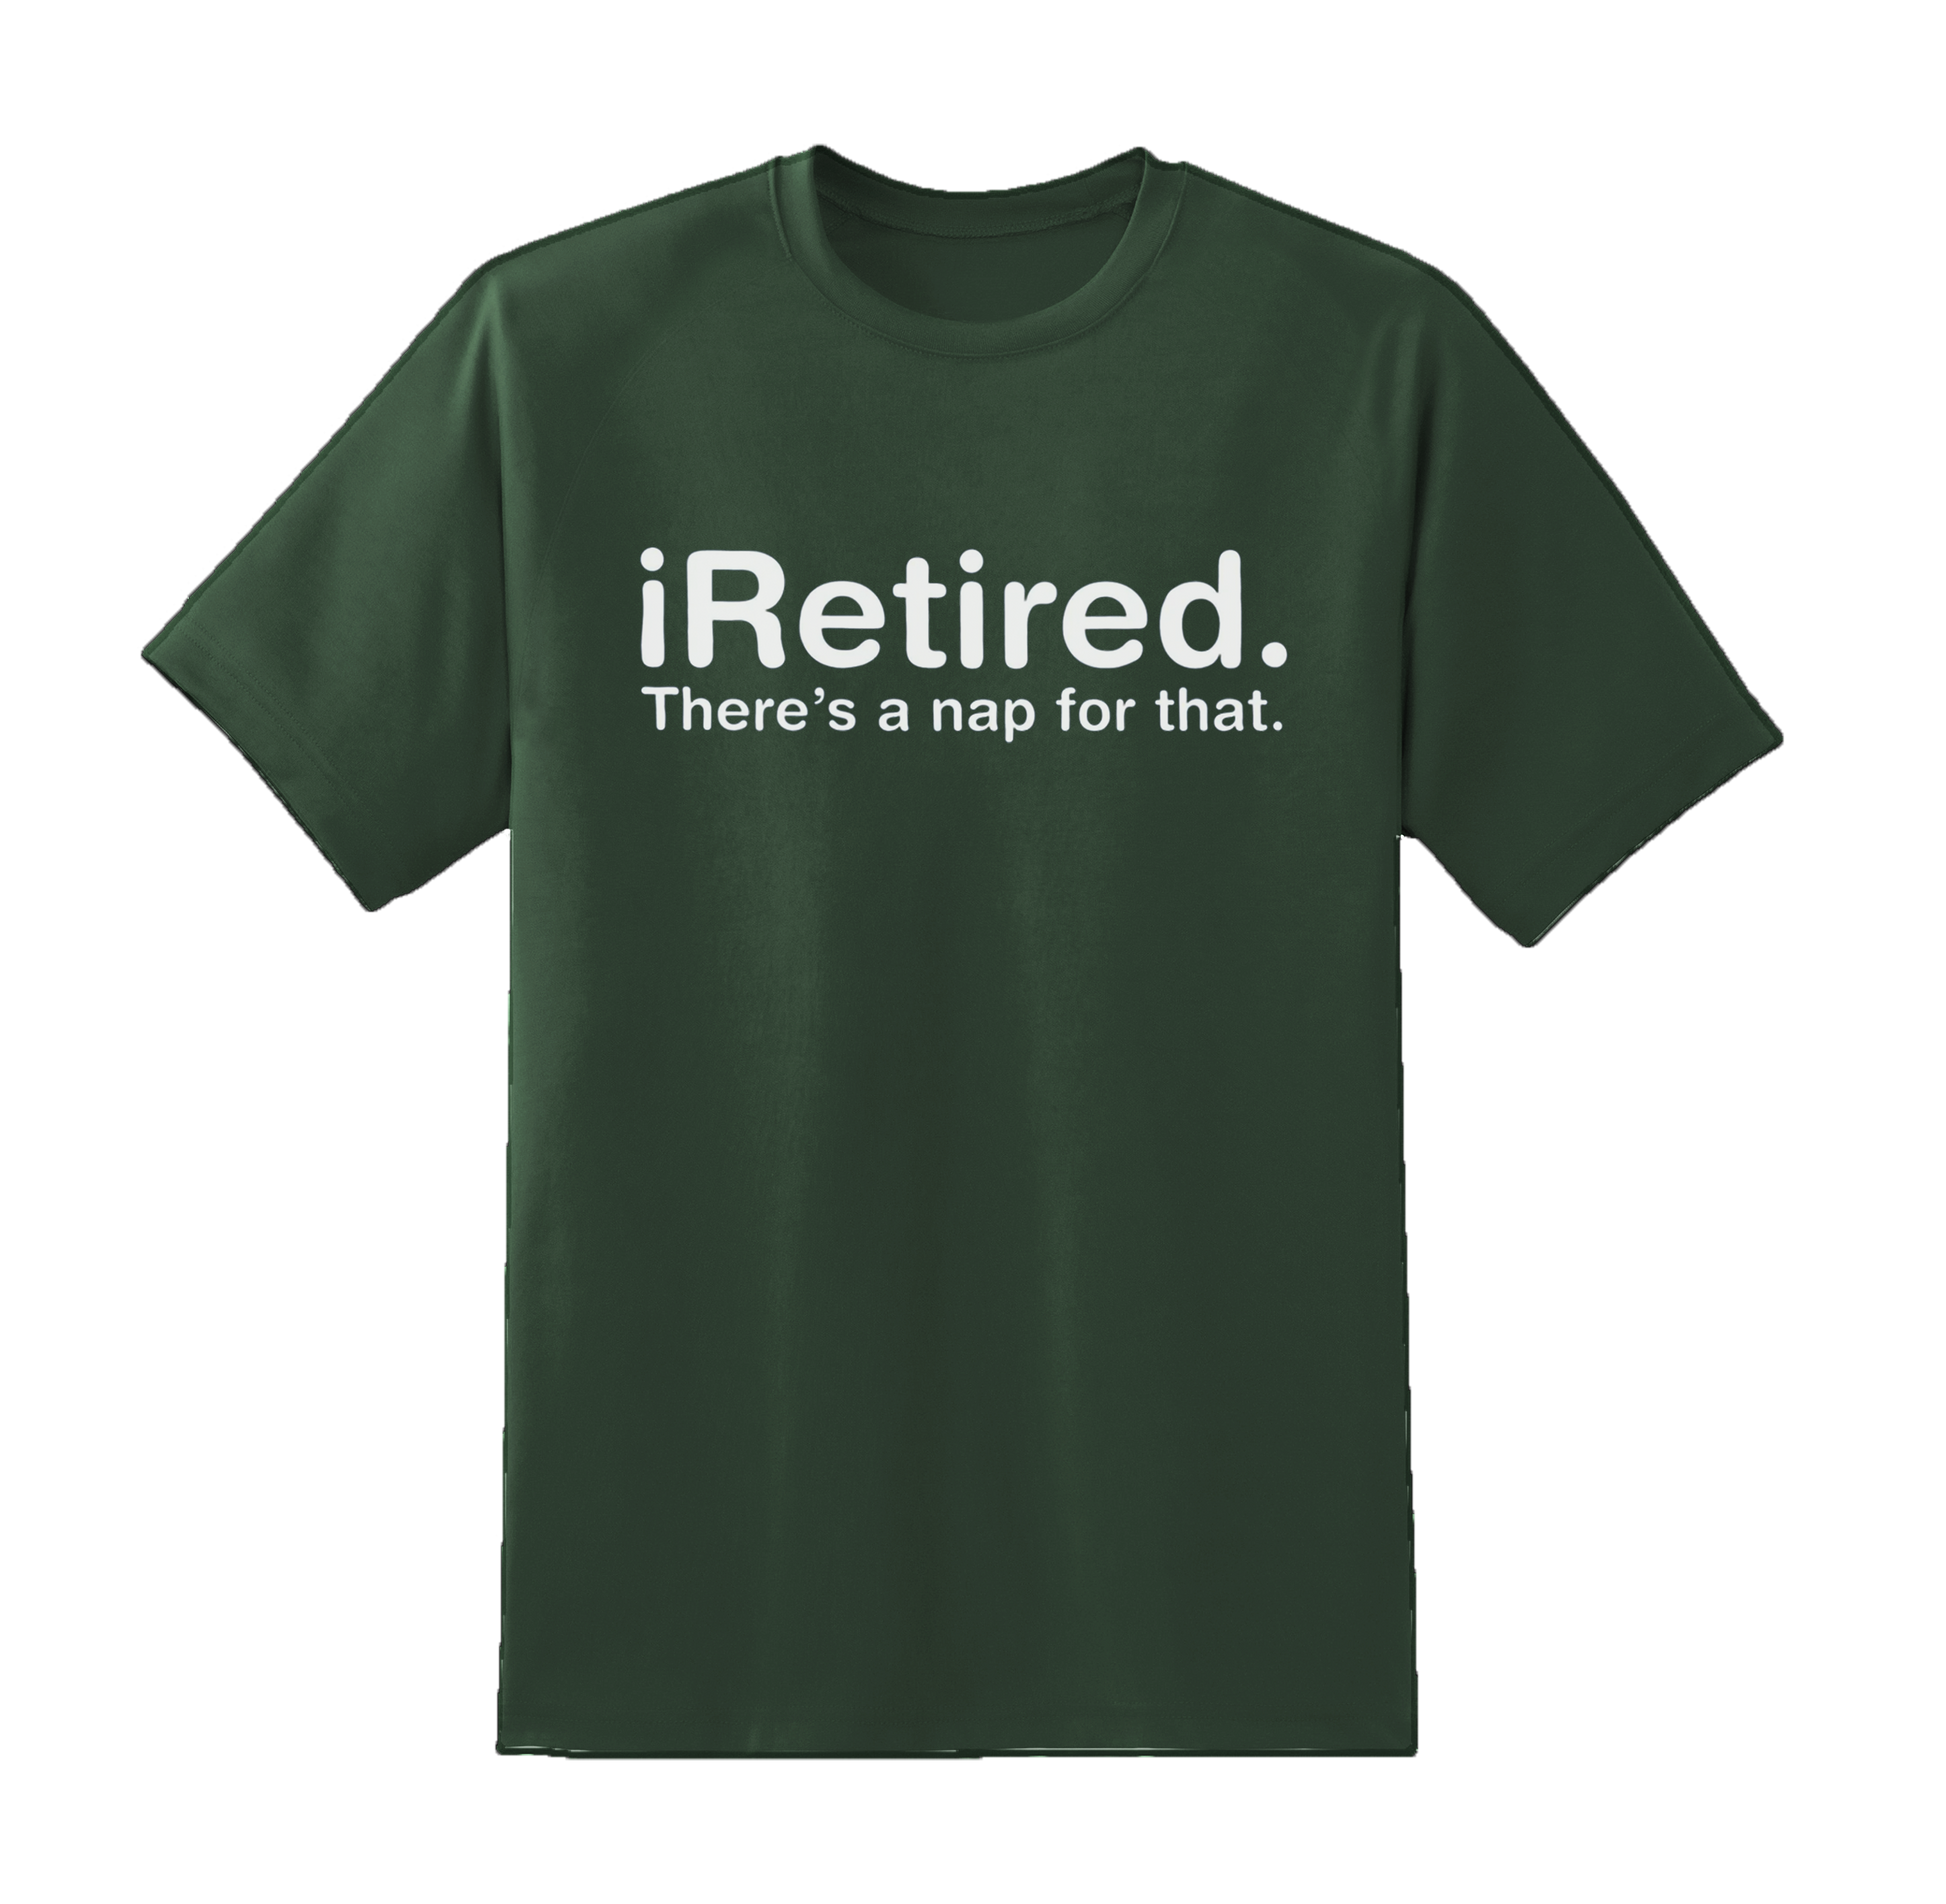 "I Retired" Tee